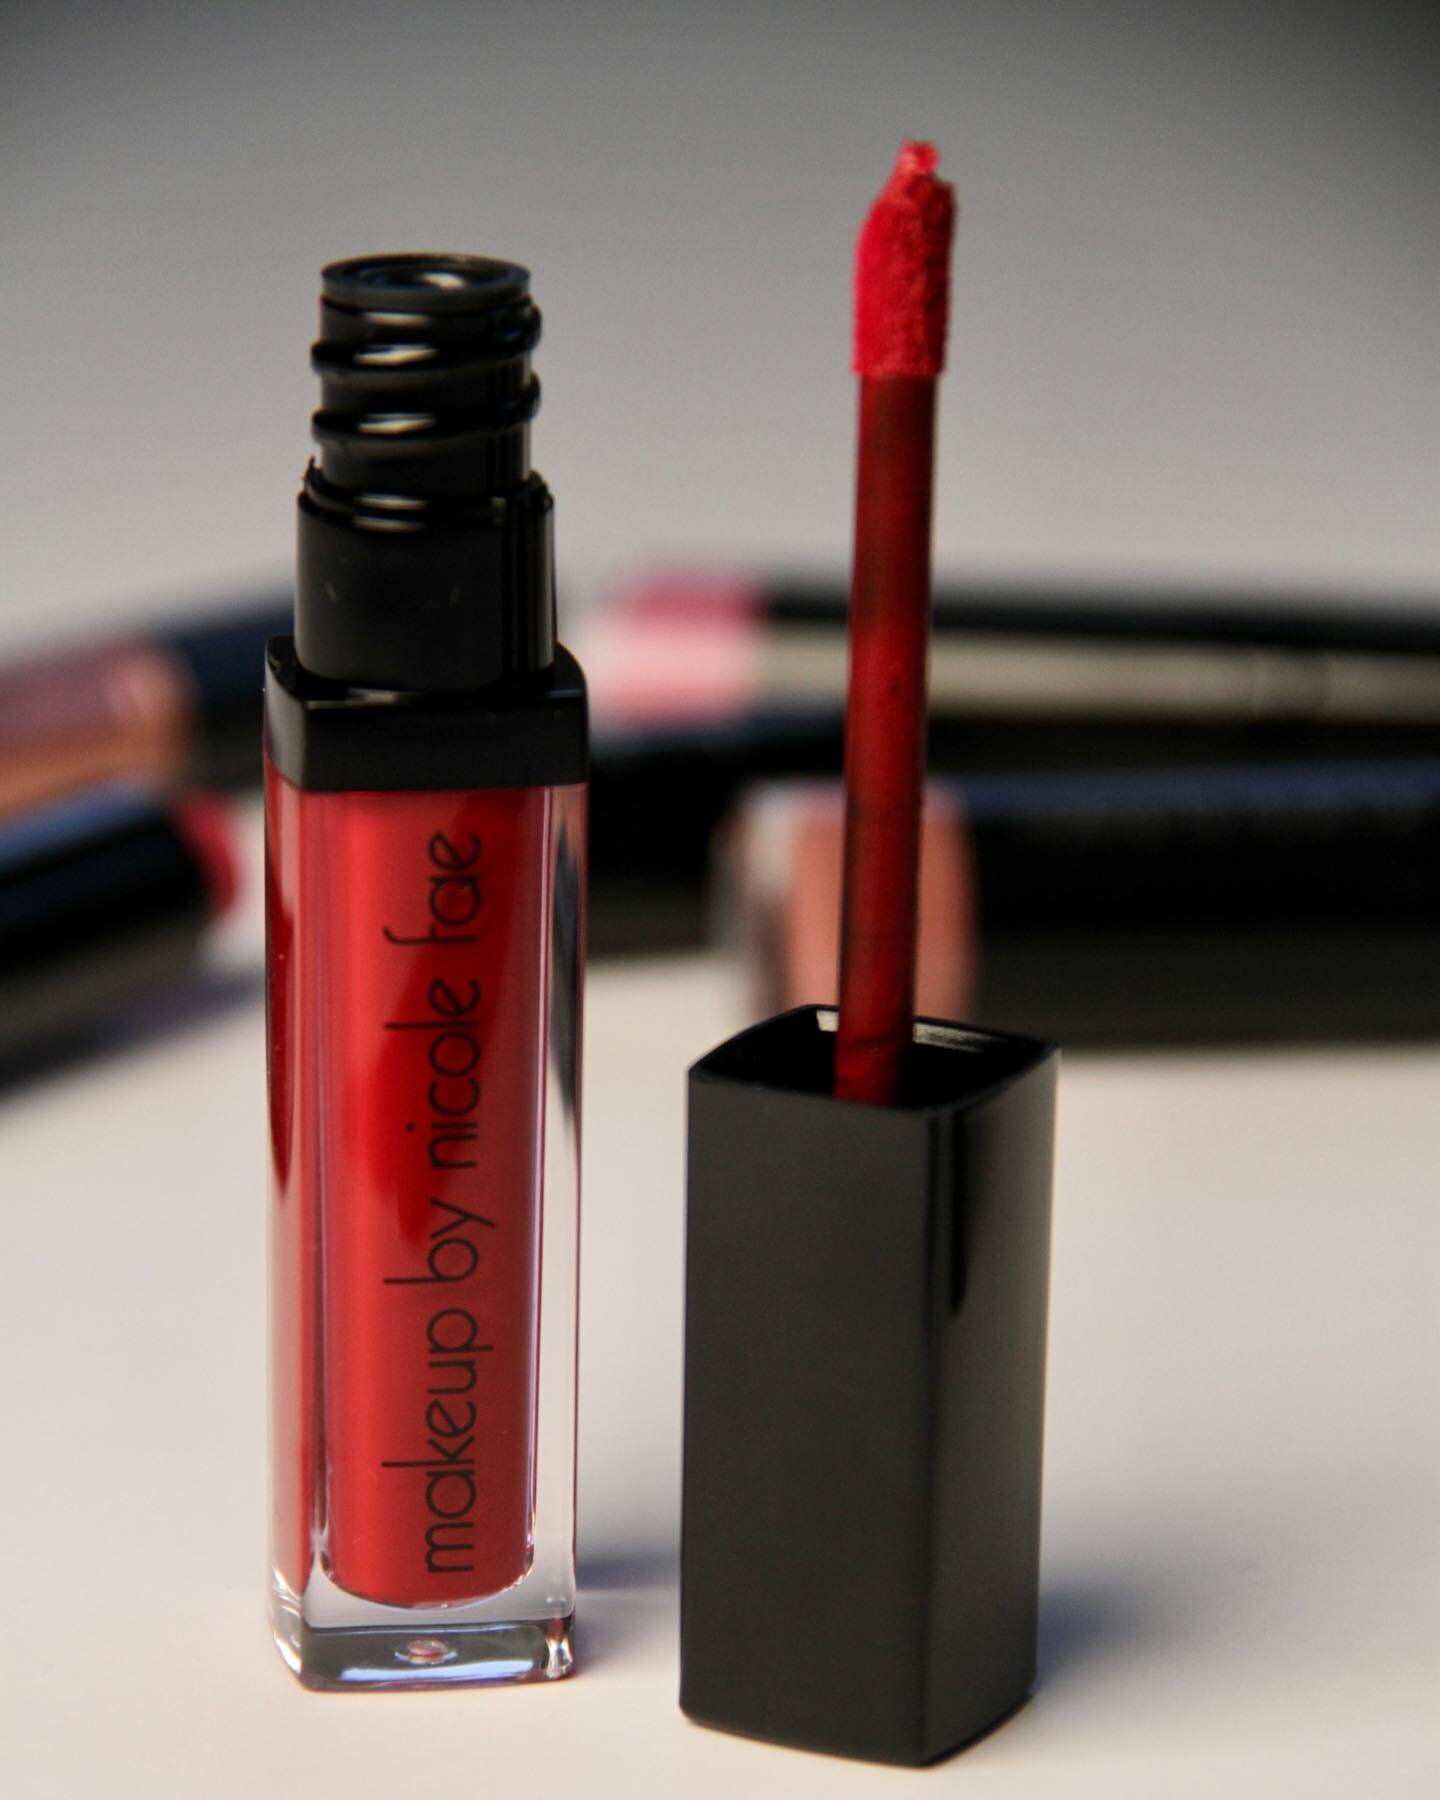 Liquid Velvet Lipstick - $21.50

Matte Finish
Long-wear
Not super dry feeling

#makeup #lipstick #mattelipstick #longwearlipstick